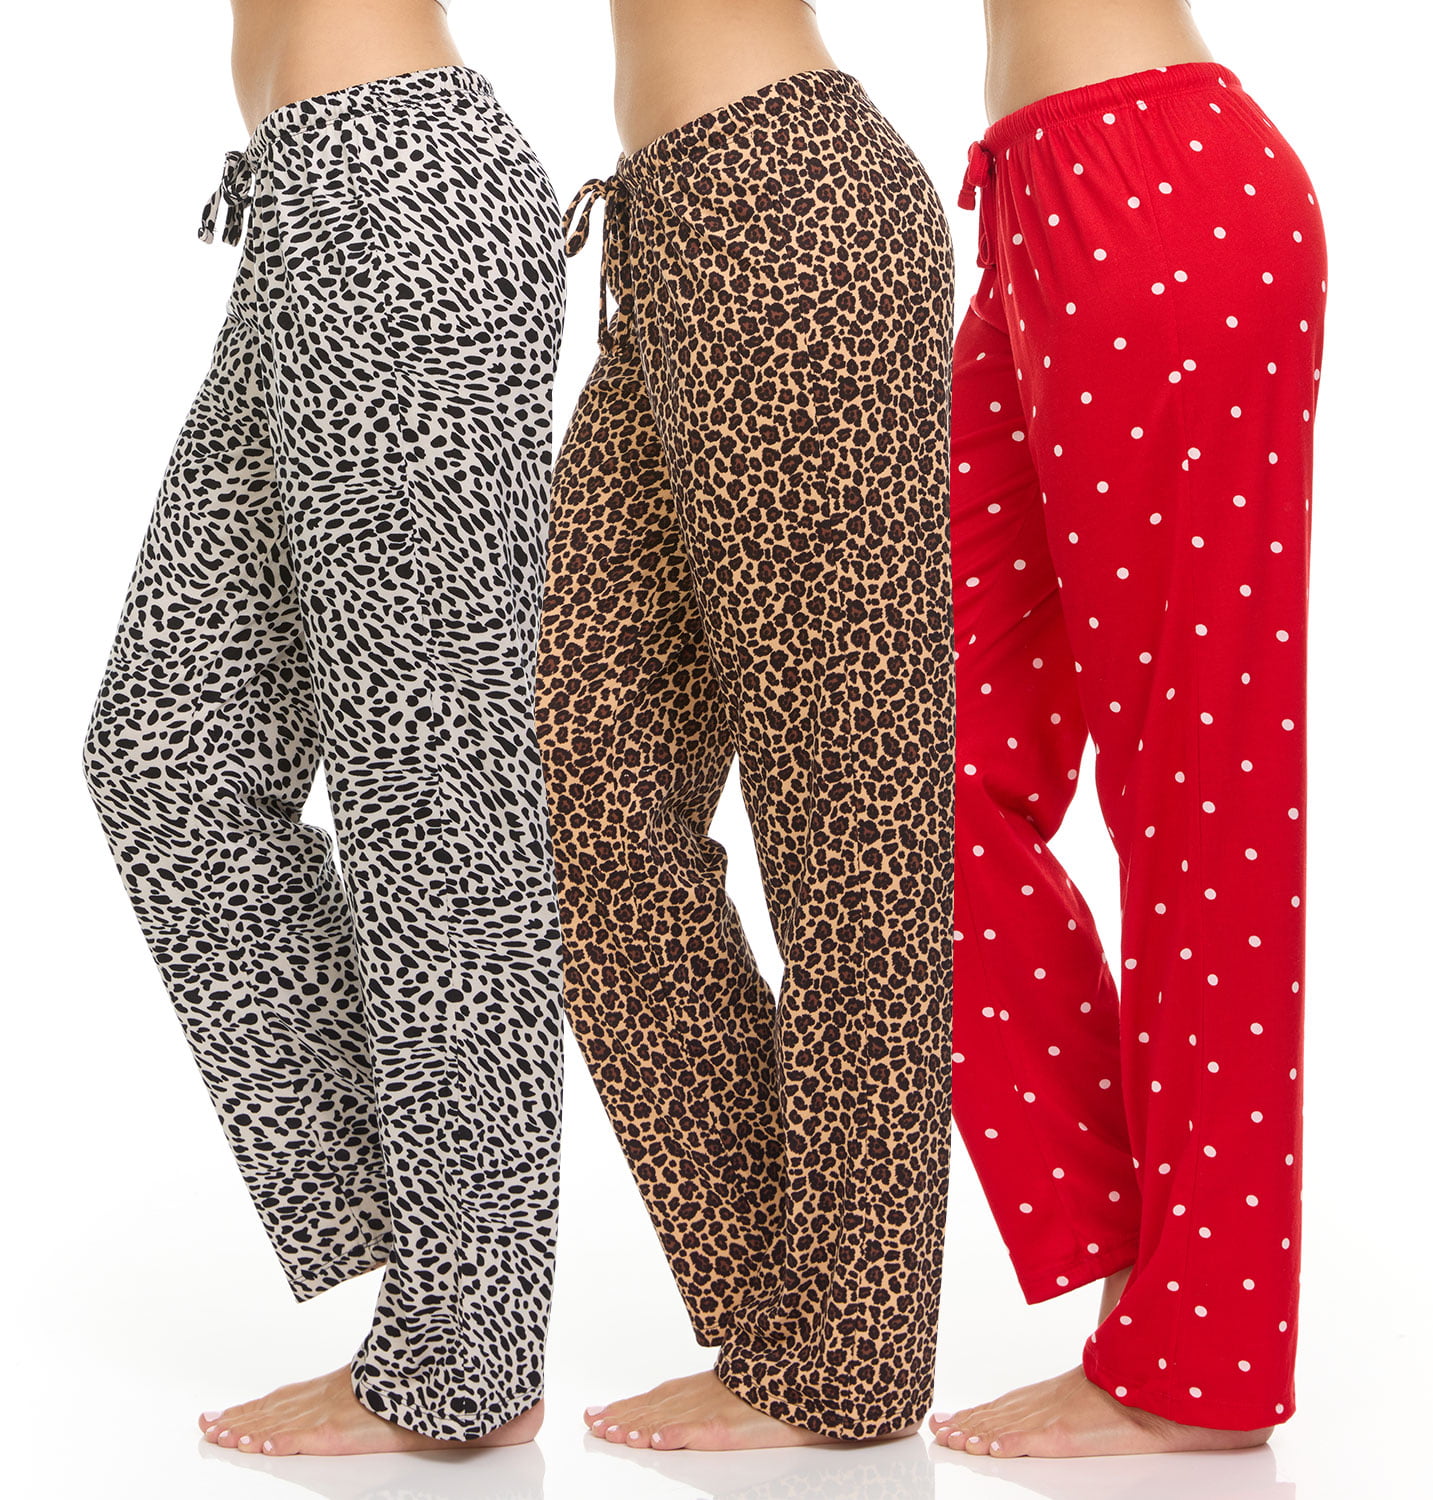 Pack of 3 Comfortable Long Pajama Pants For Women Women’s Printed Lounge Pants 